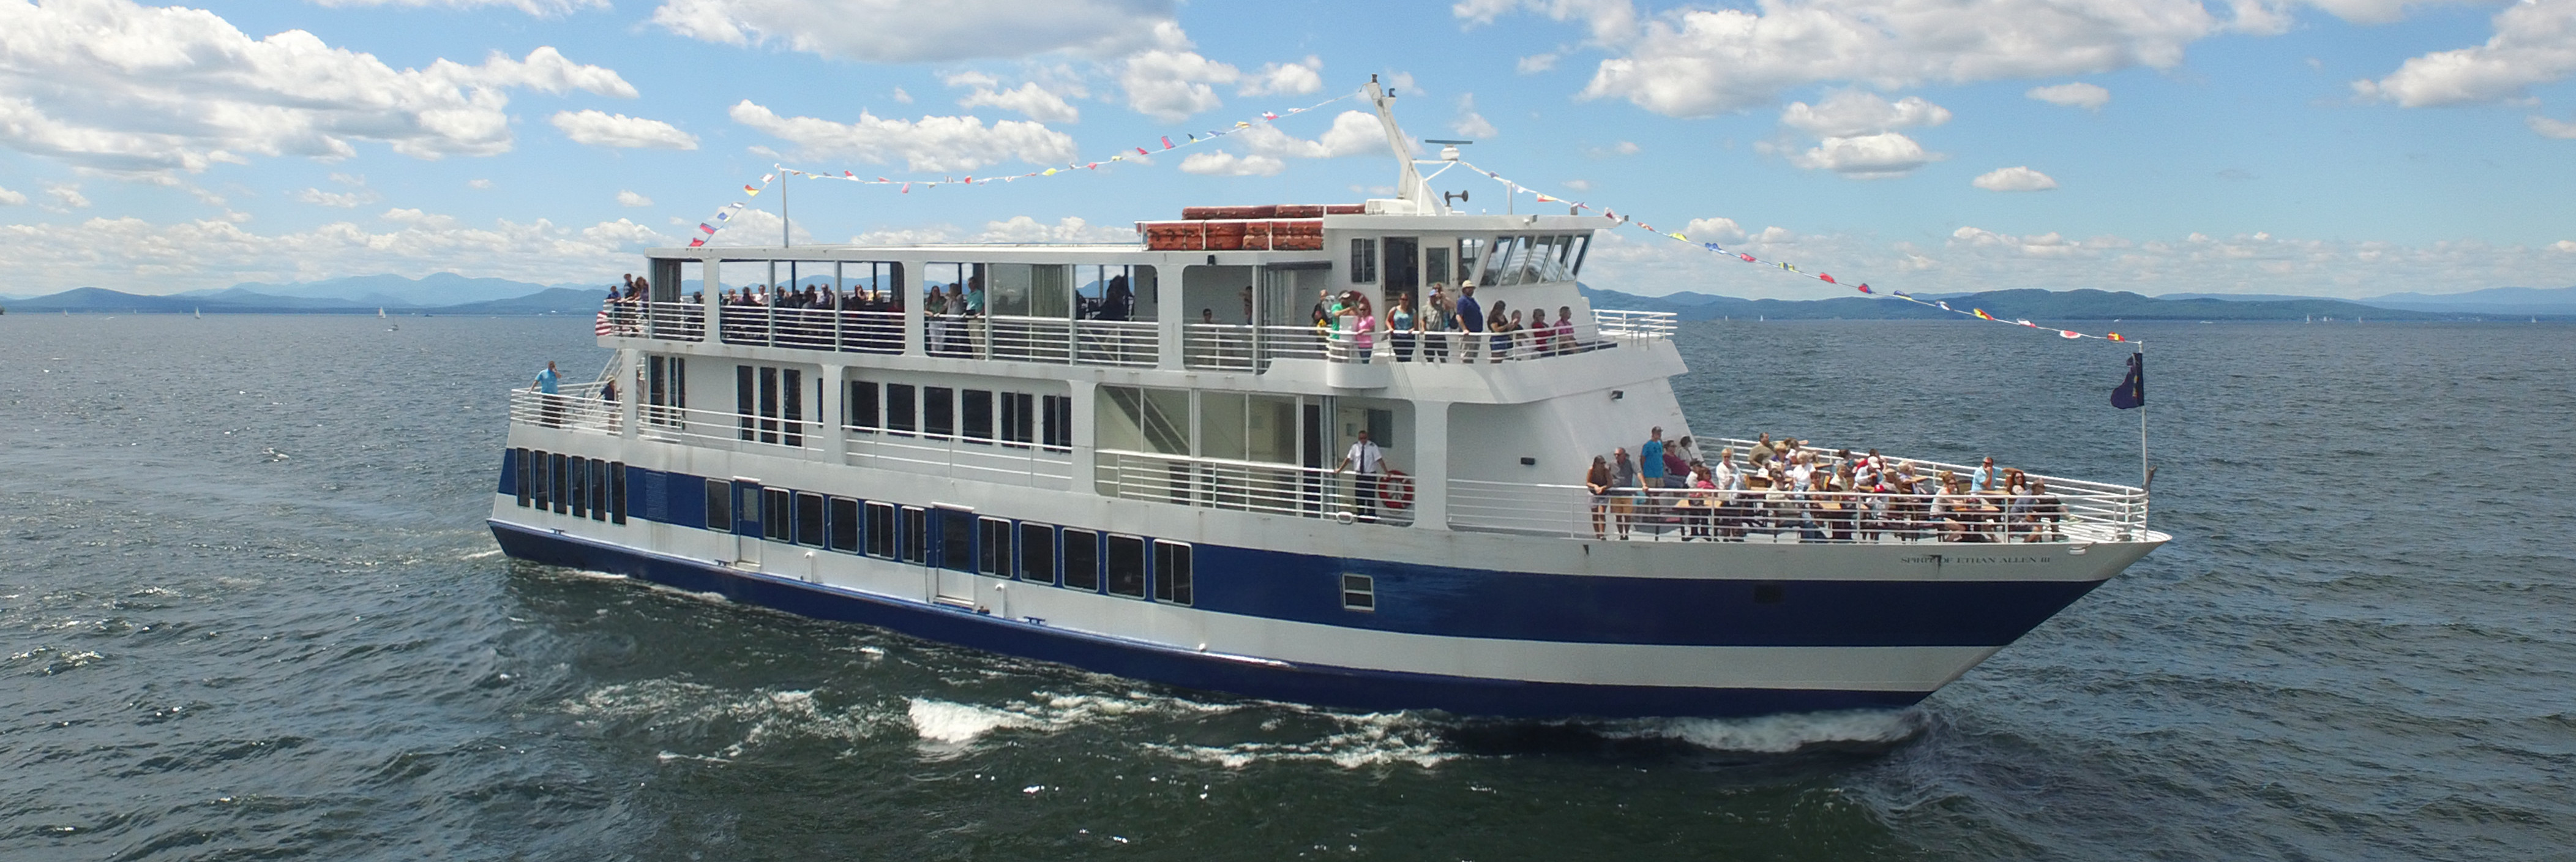 vermont cruises lake champlain